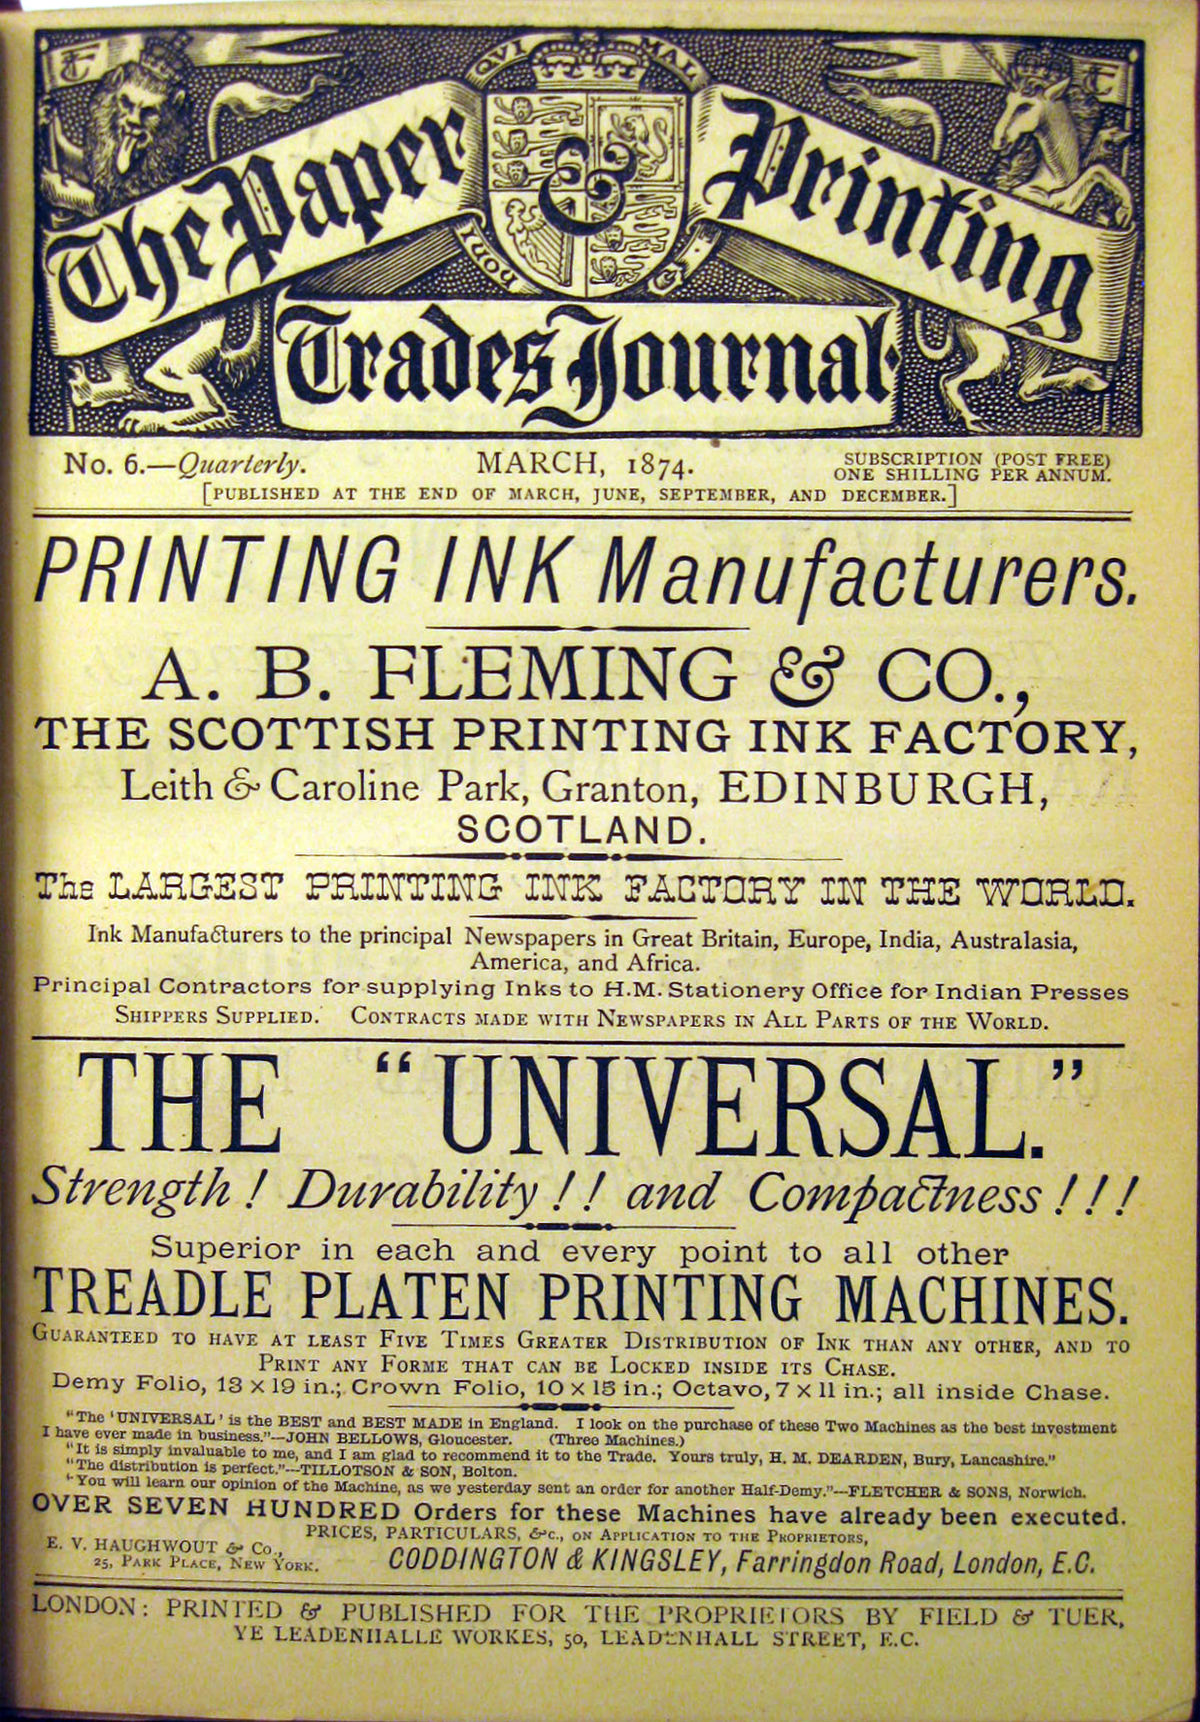 Paper & Trades Journal - Wikipedia